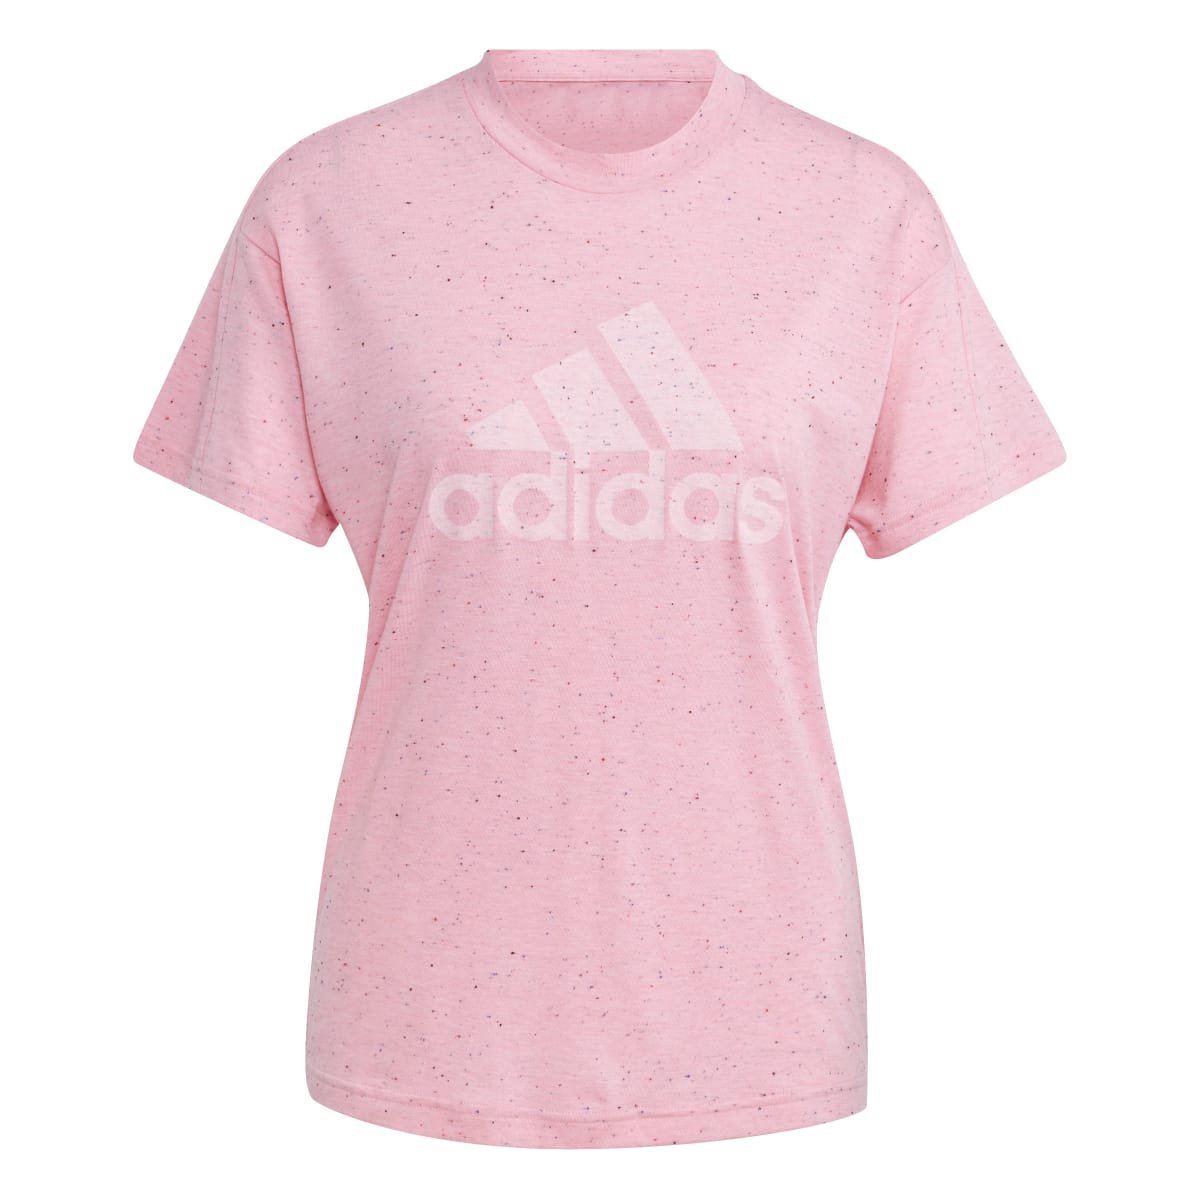 - Winners - Feminina adidas Fátima Esportes Sportswear Future Icons Camiseta 3.0